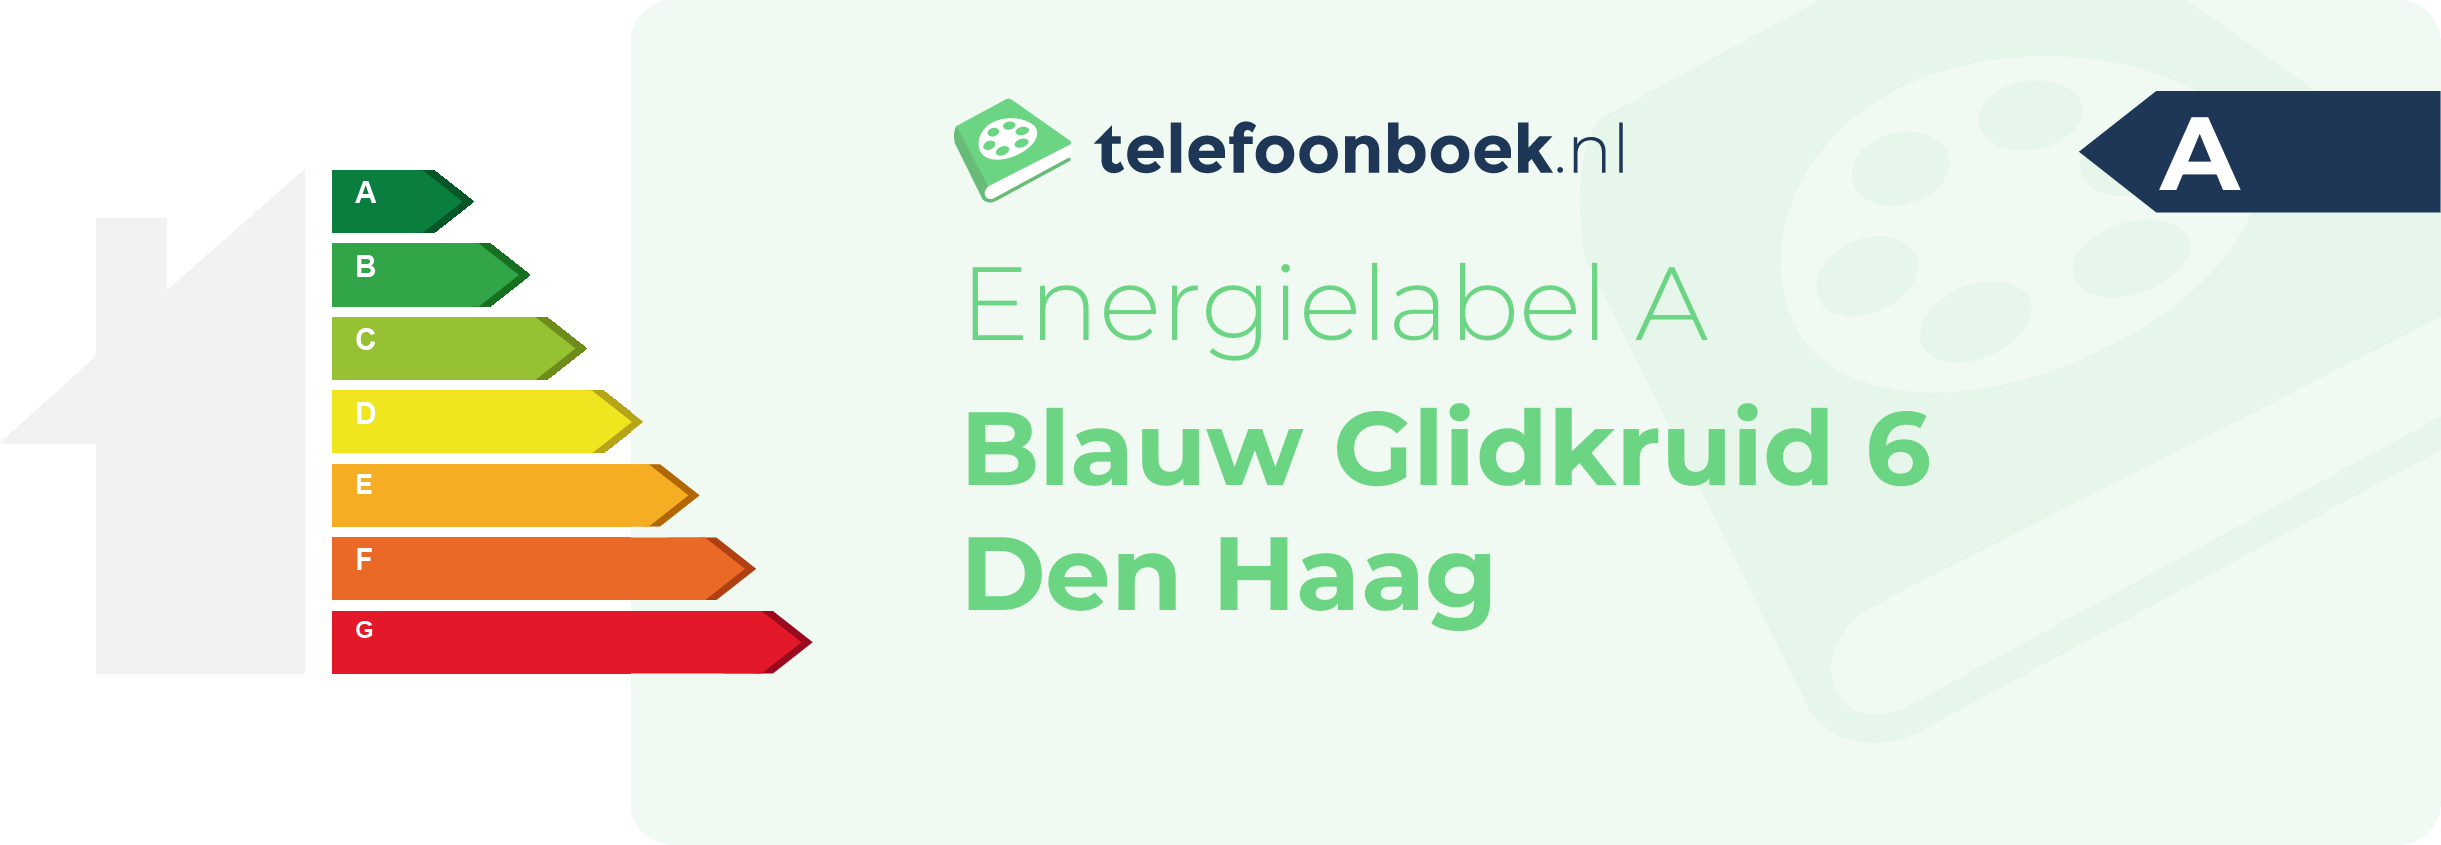 Energielabel Blauw Glidkruid 6 Den Haag